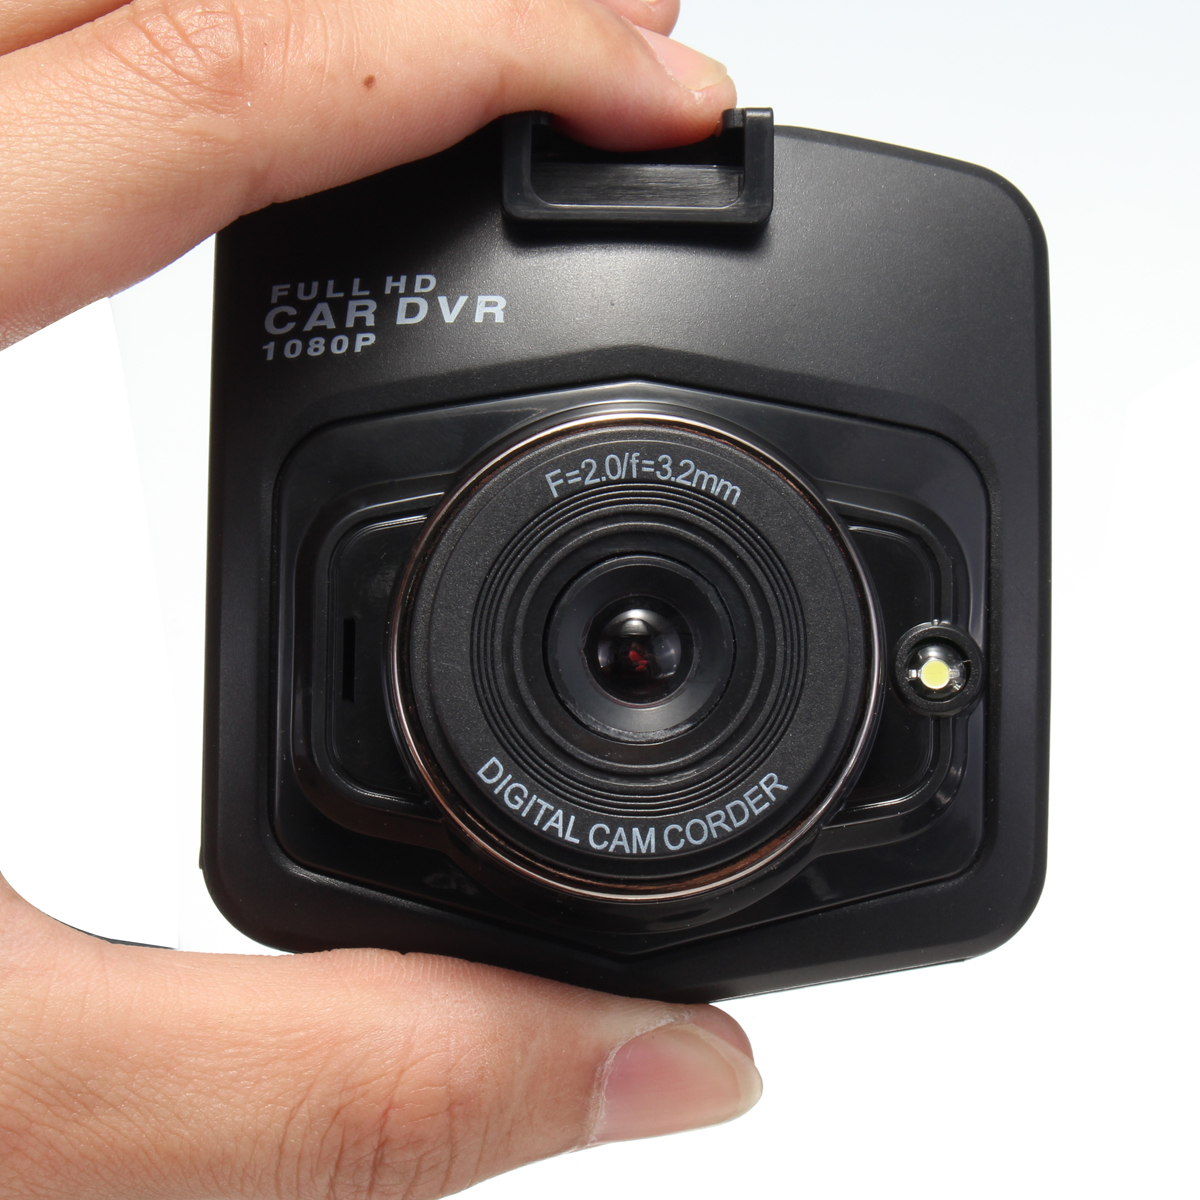 24-Inch-LCD-1080P-HD-Vehicle-Camera-Video-Recorder-Dash-Cam-G-sensor-Night-Car-DVR-1324248